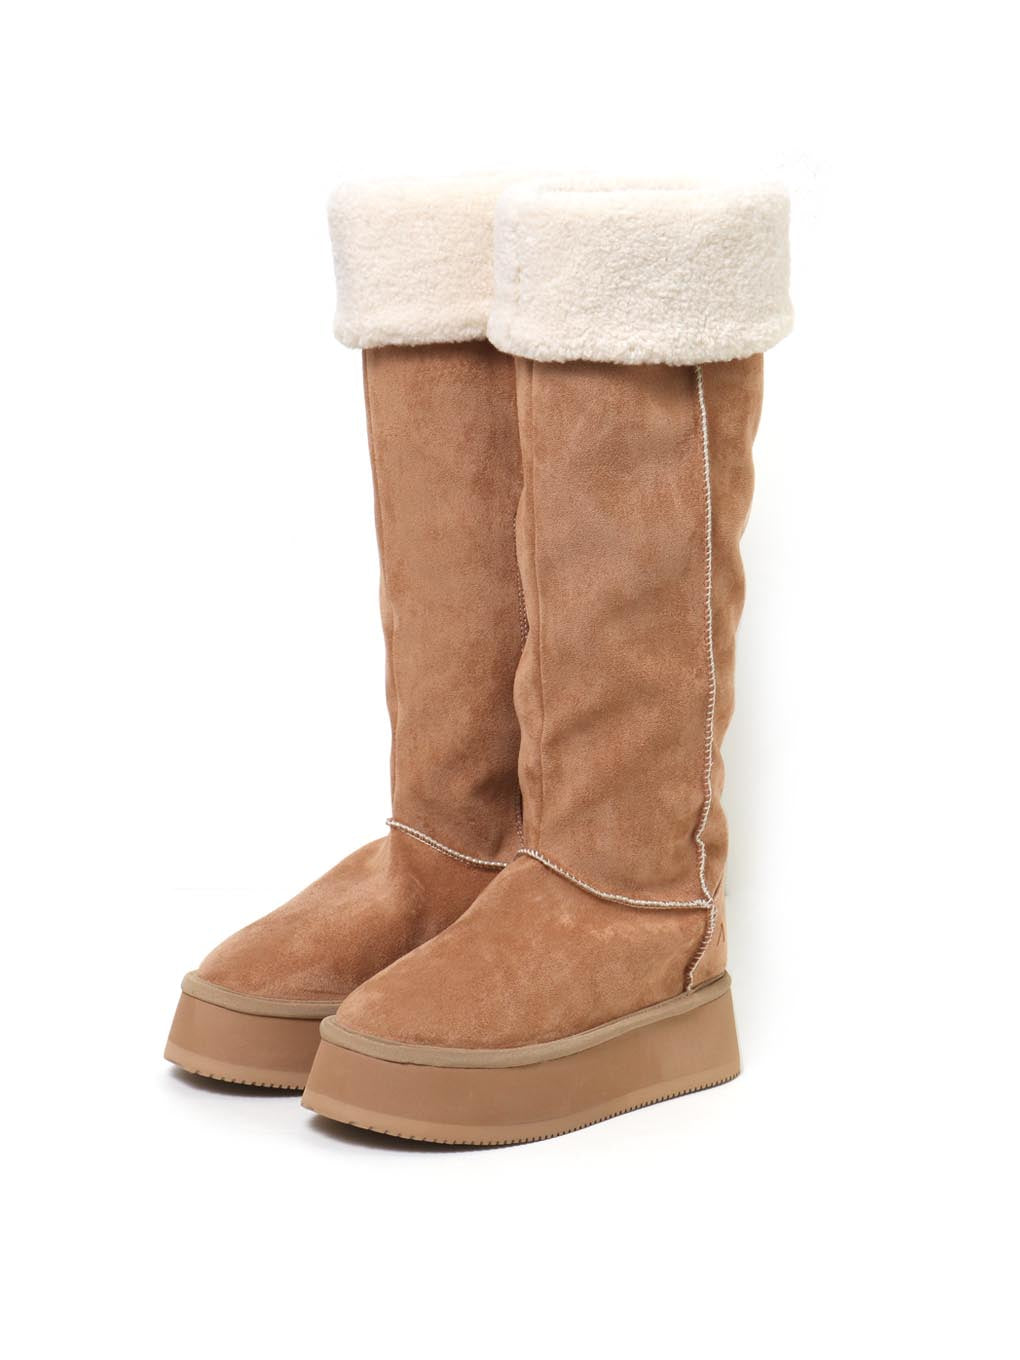 Gigi mouton boots